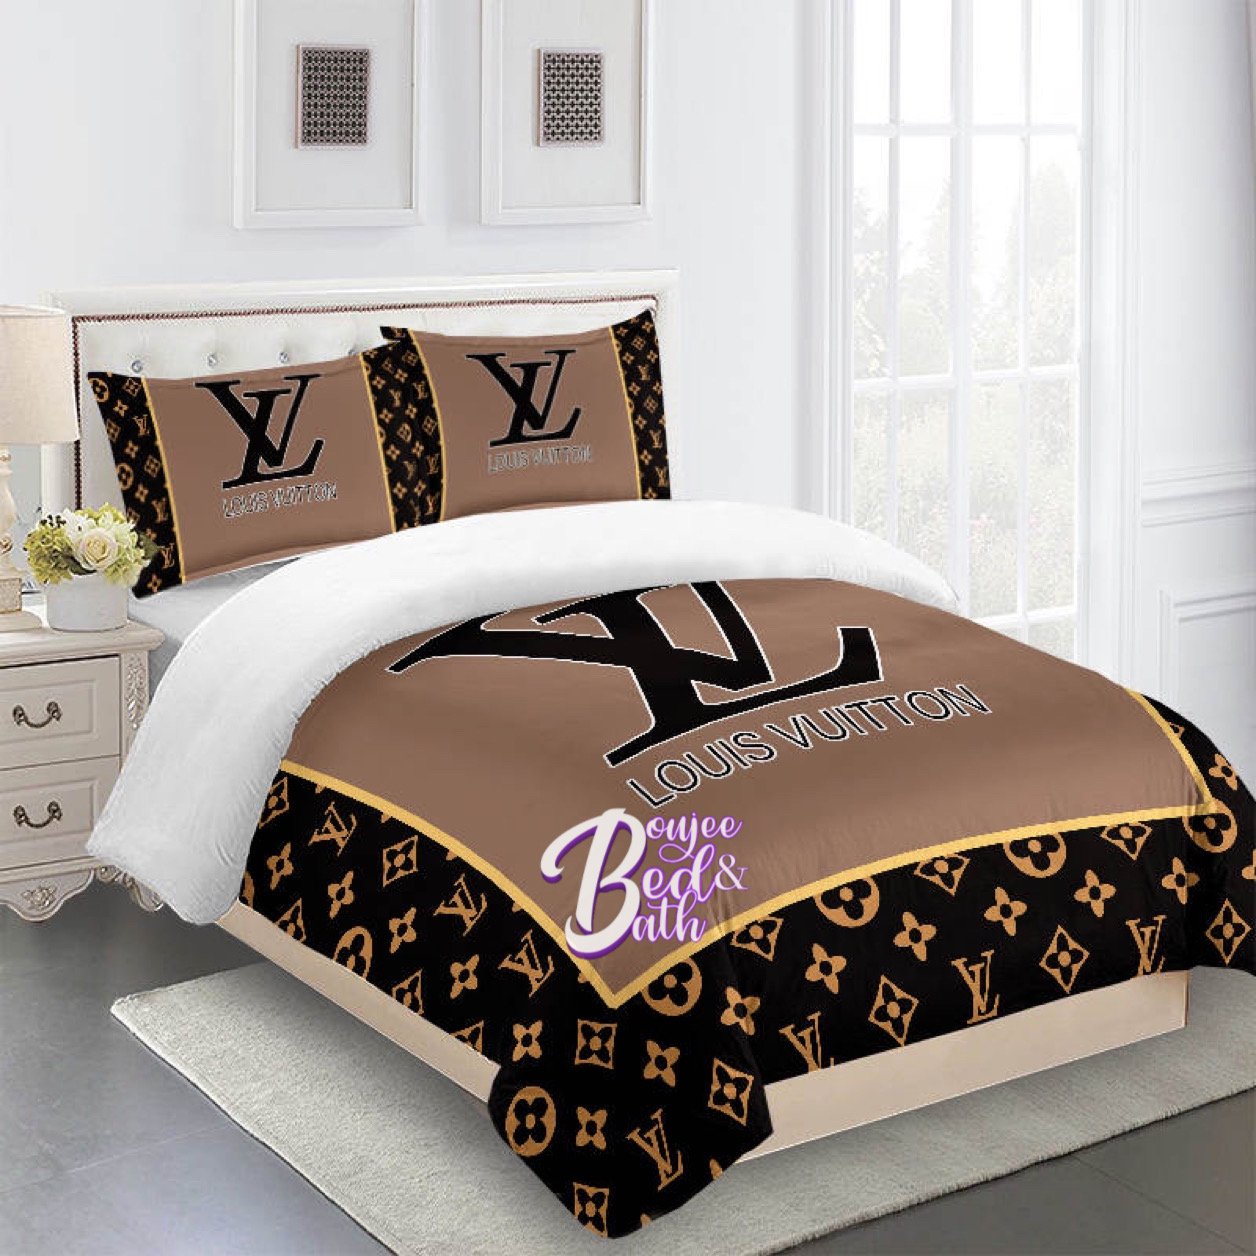 LV Inspired Bed Set  BoujeeBedBath